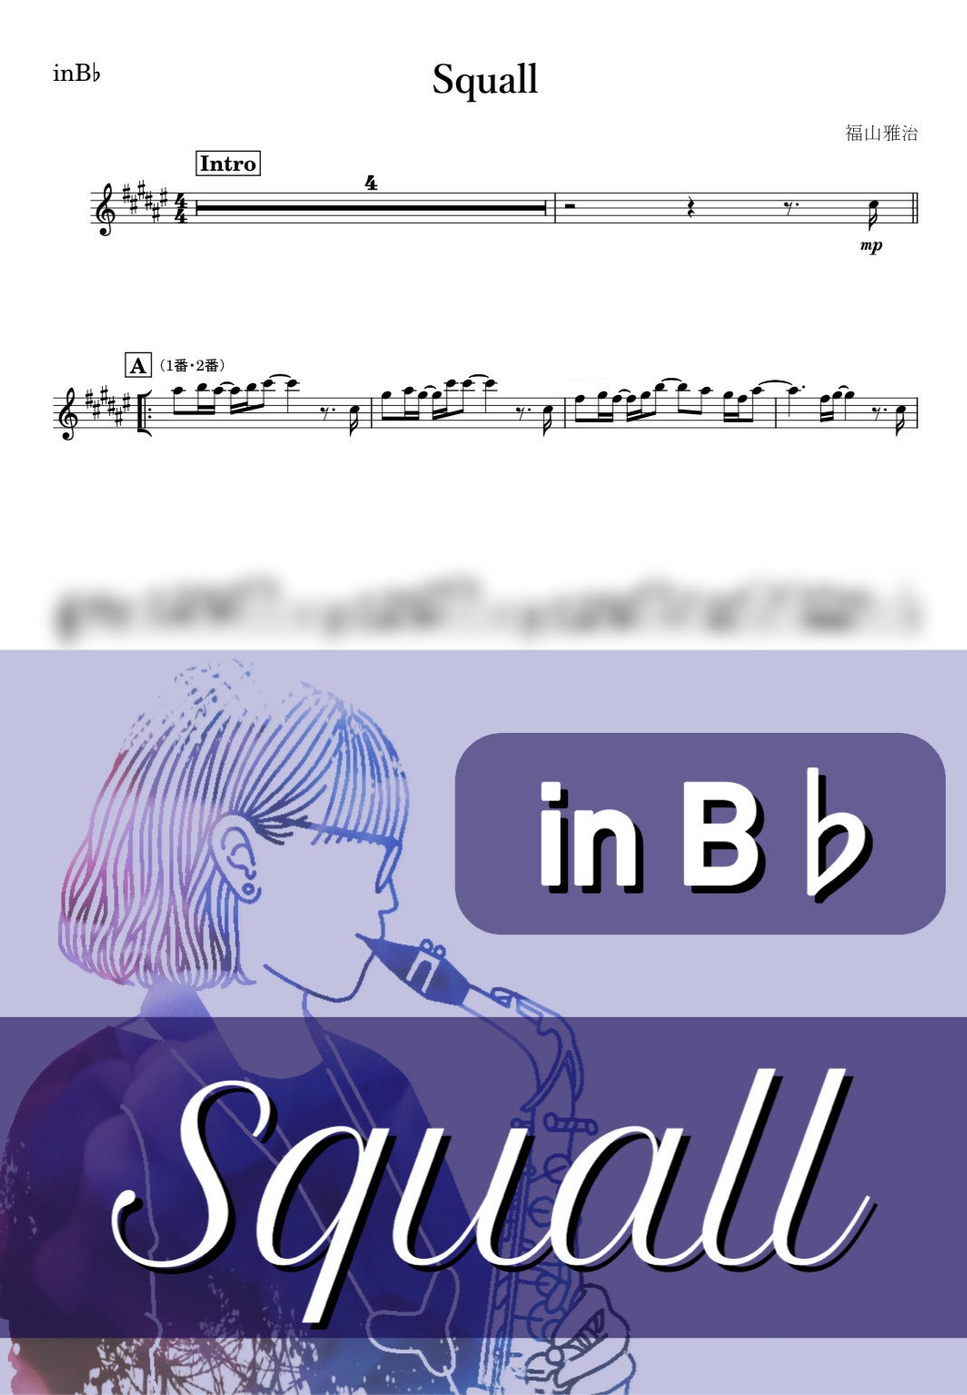 福山雅治 - Squall (B♭) by kanamusic